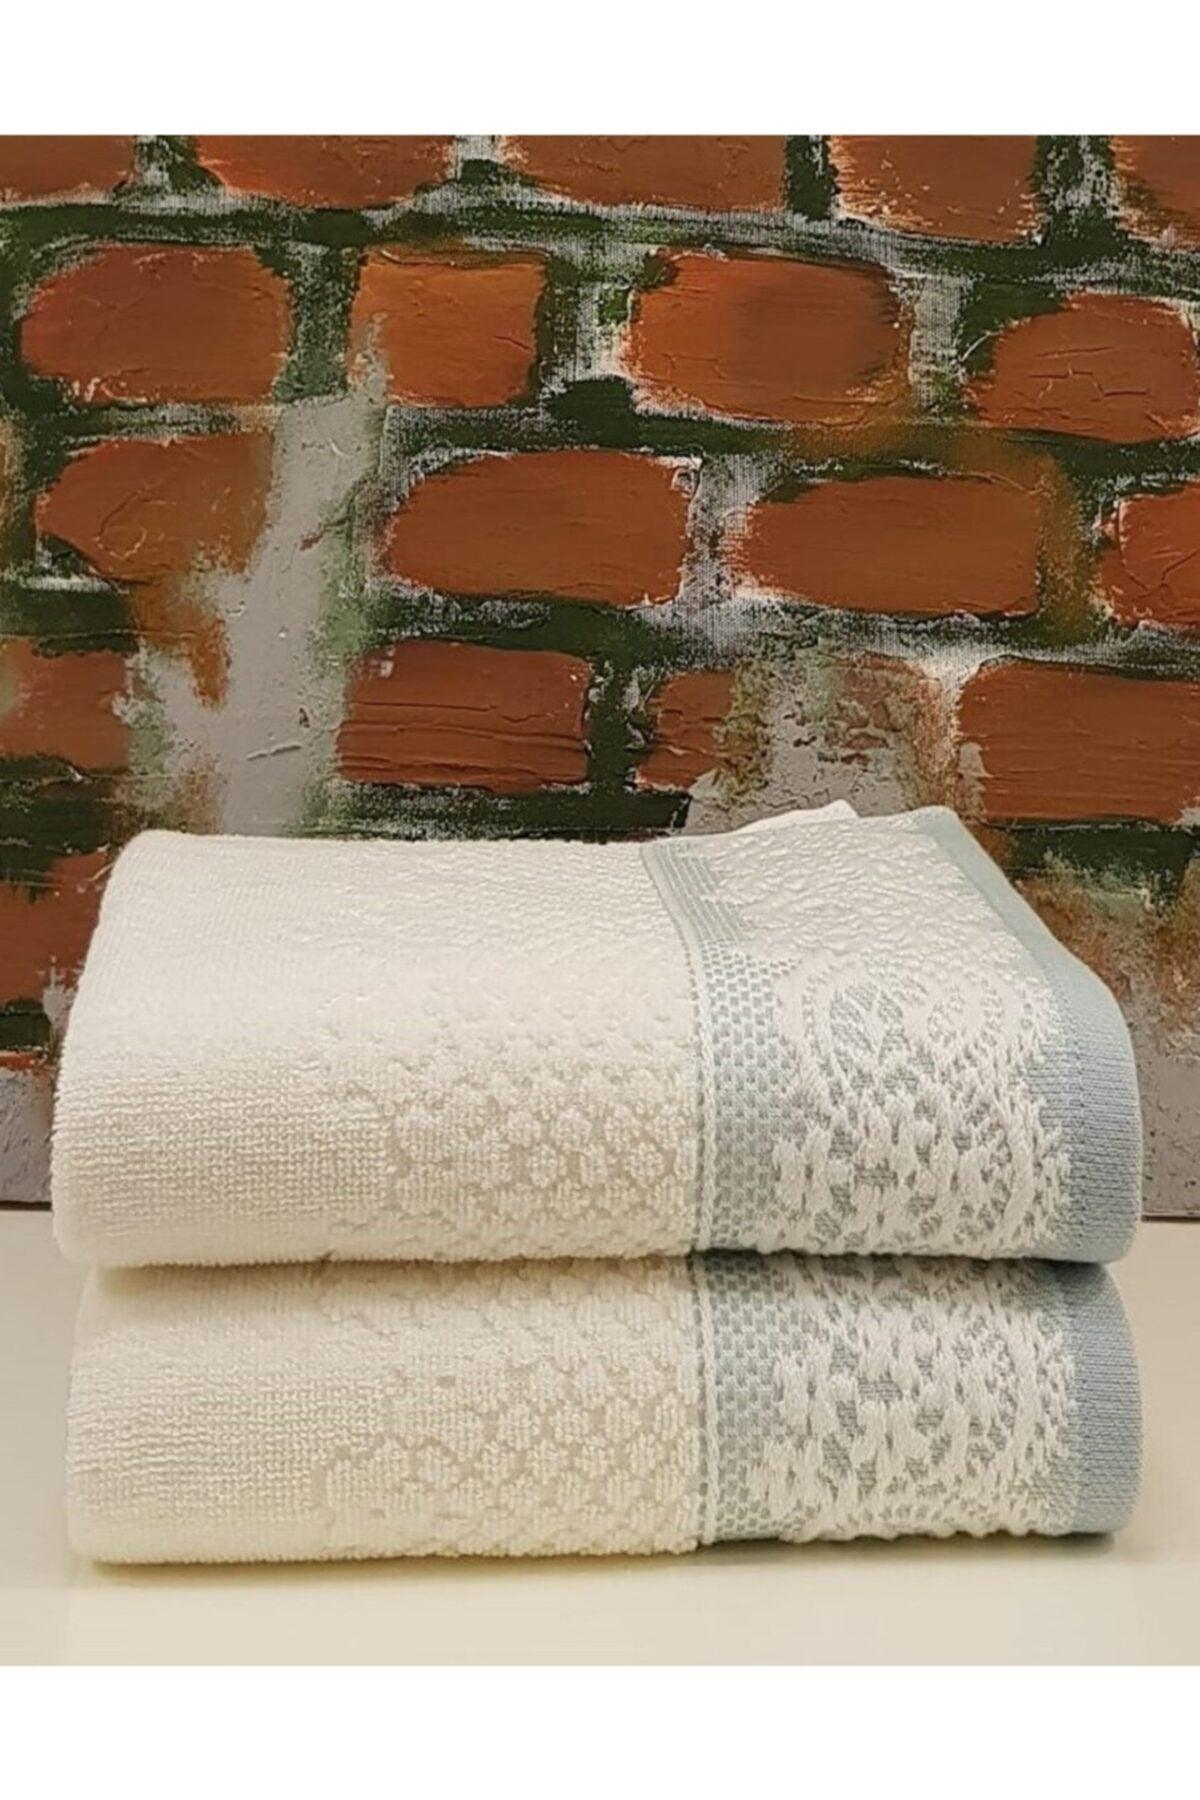 Cotton Evony Towel 2 Pcs Mint Hand Face Towel - Swordslife